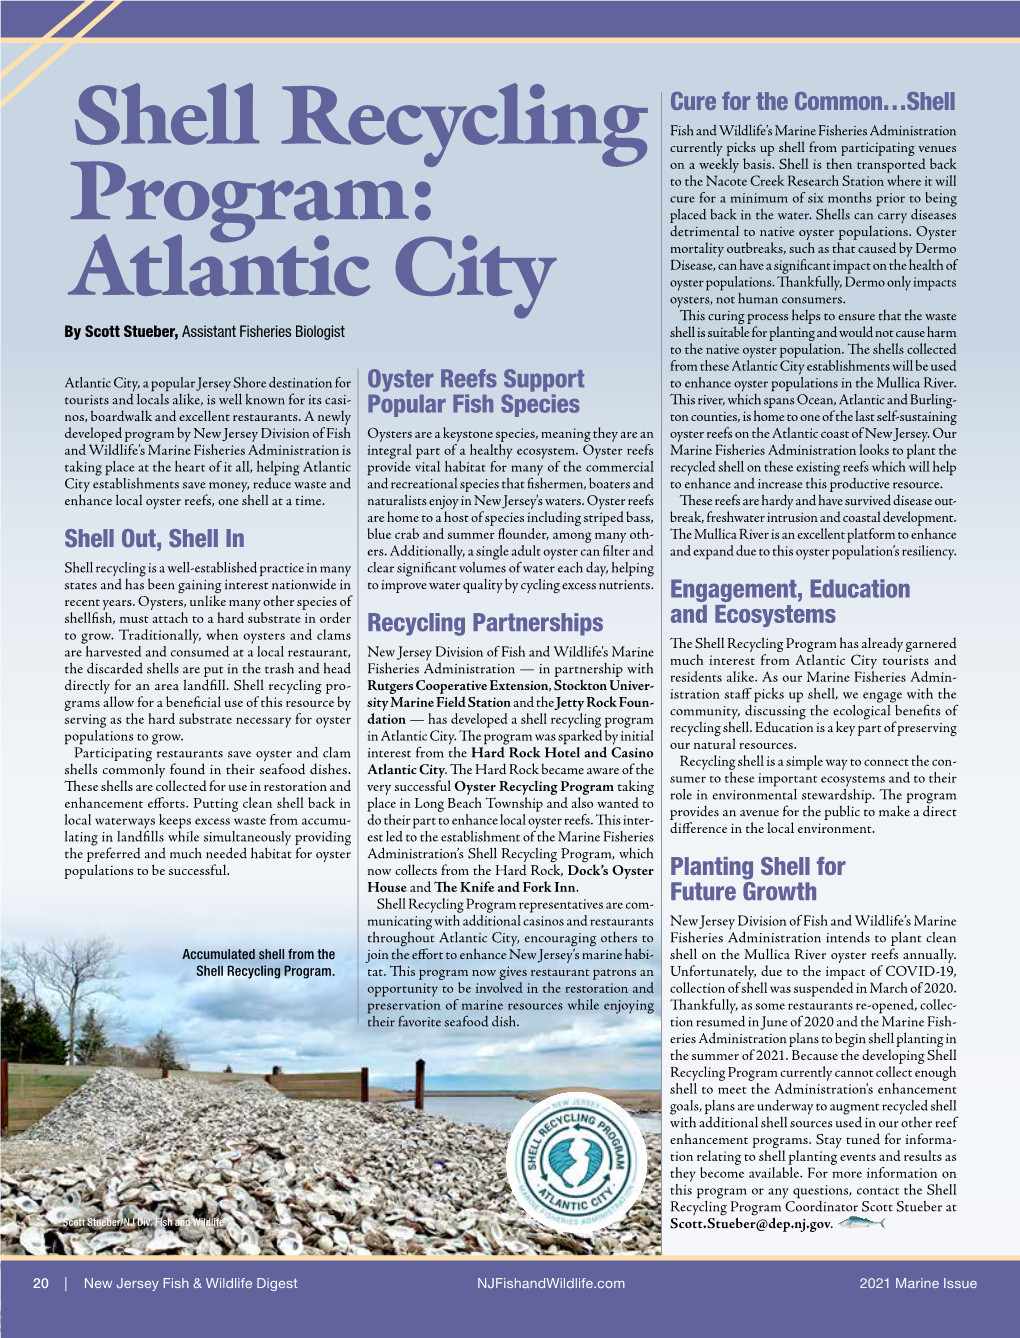 Shell Recycling Program: Atlantic City